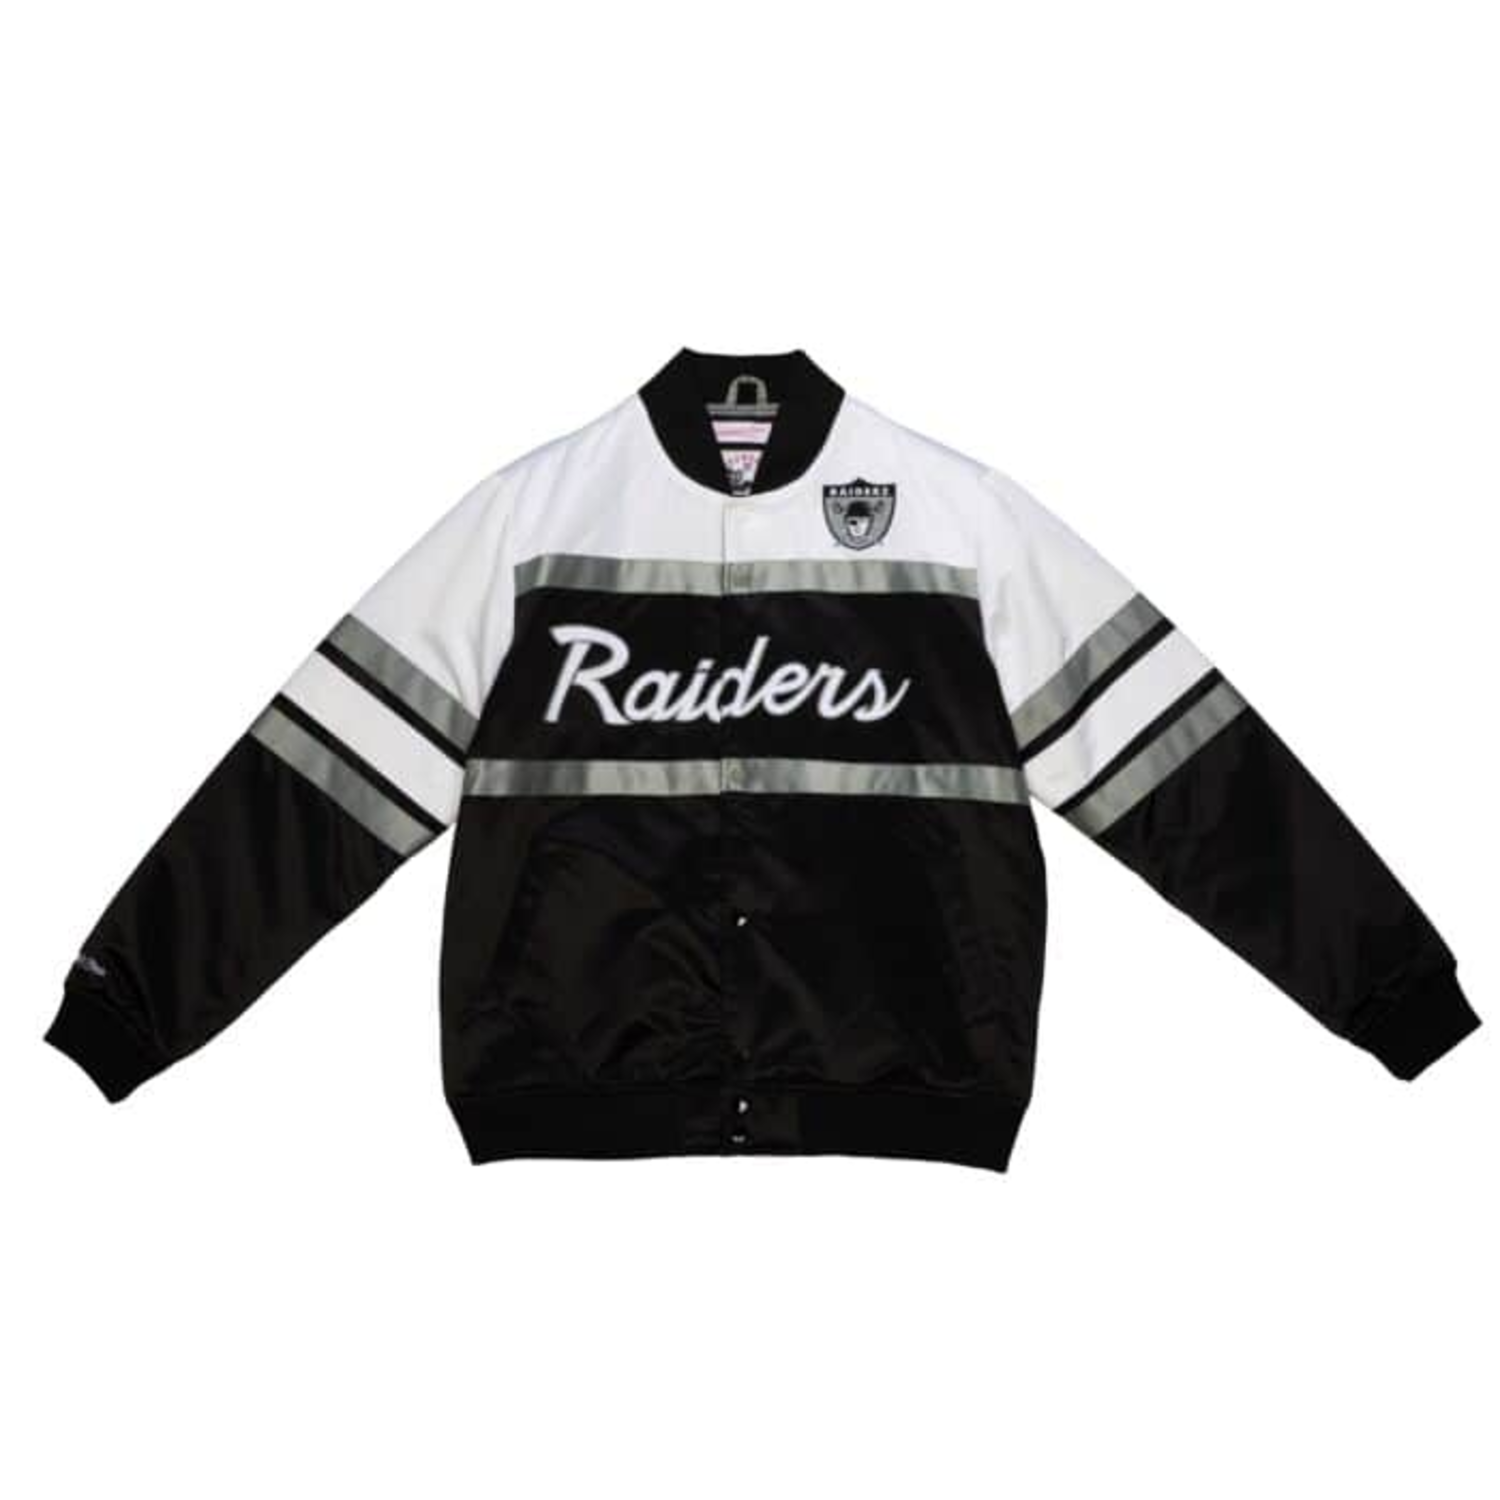 lv raiders coat